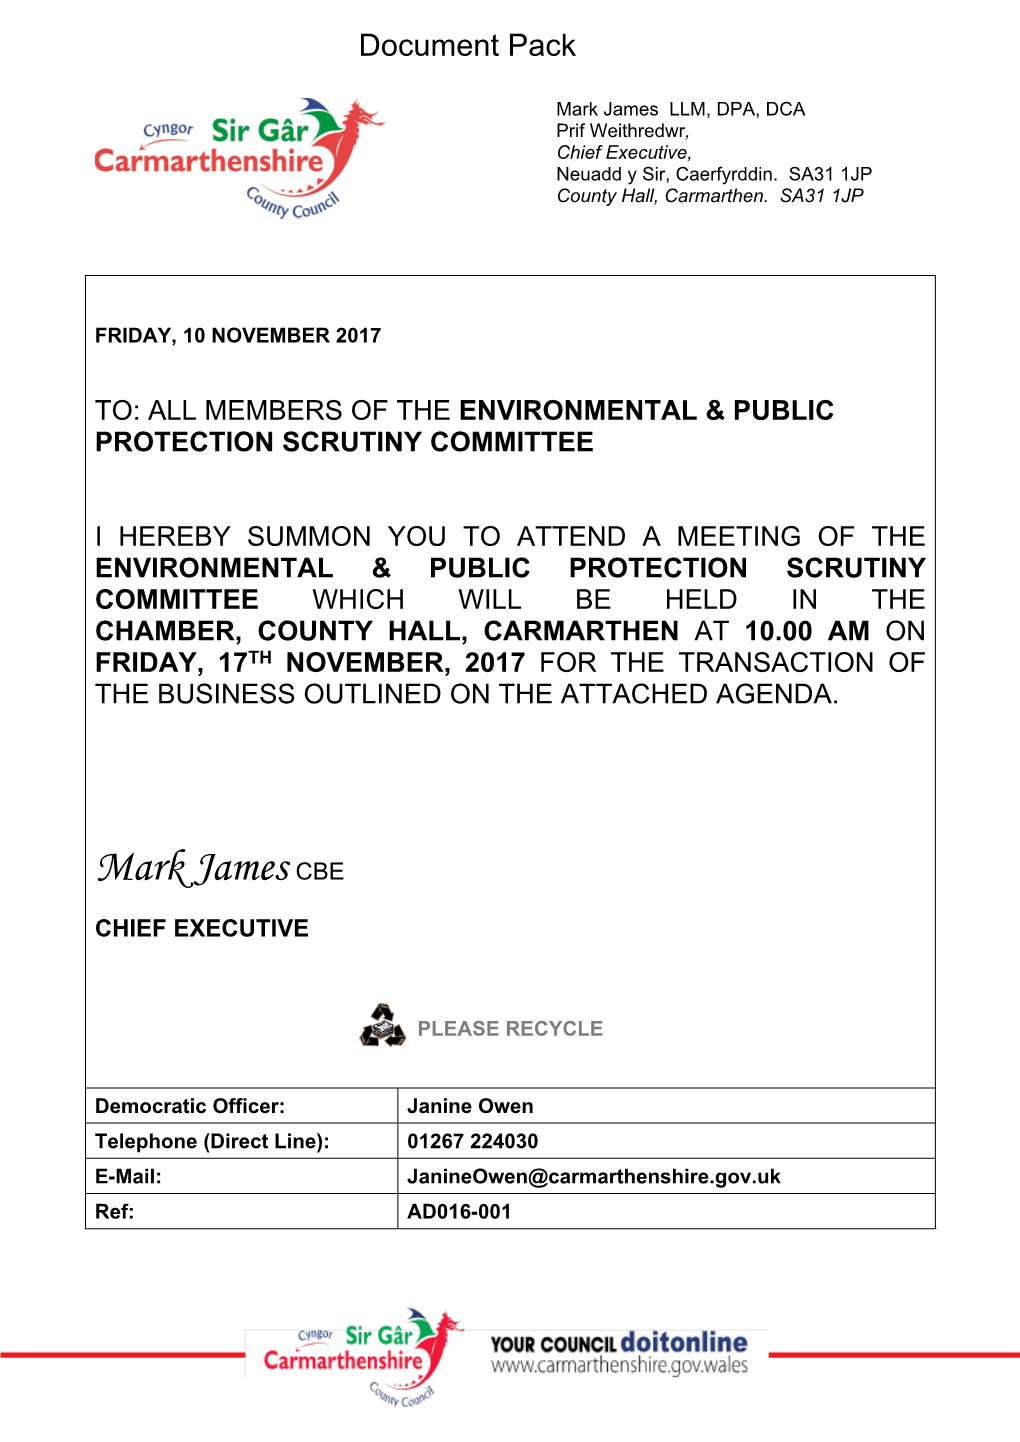 (Public Pack)Agenda Document for Environmental & Public Protection